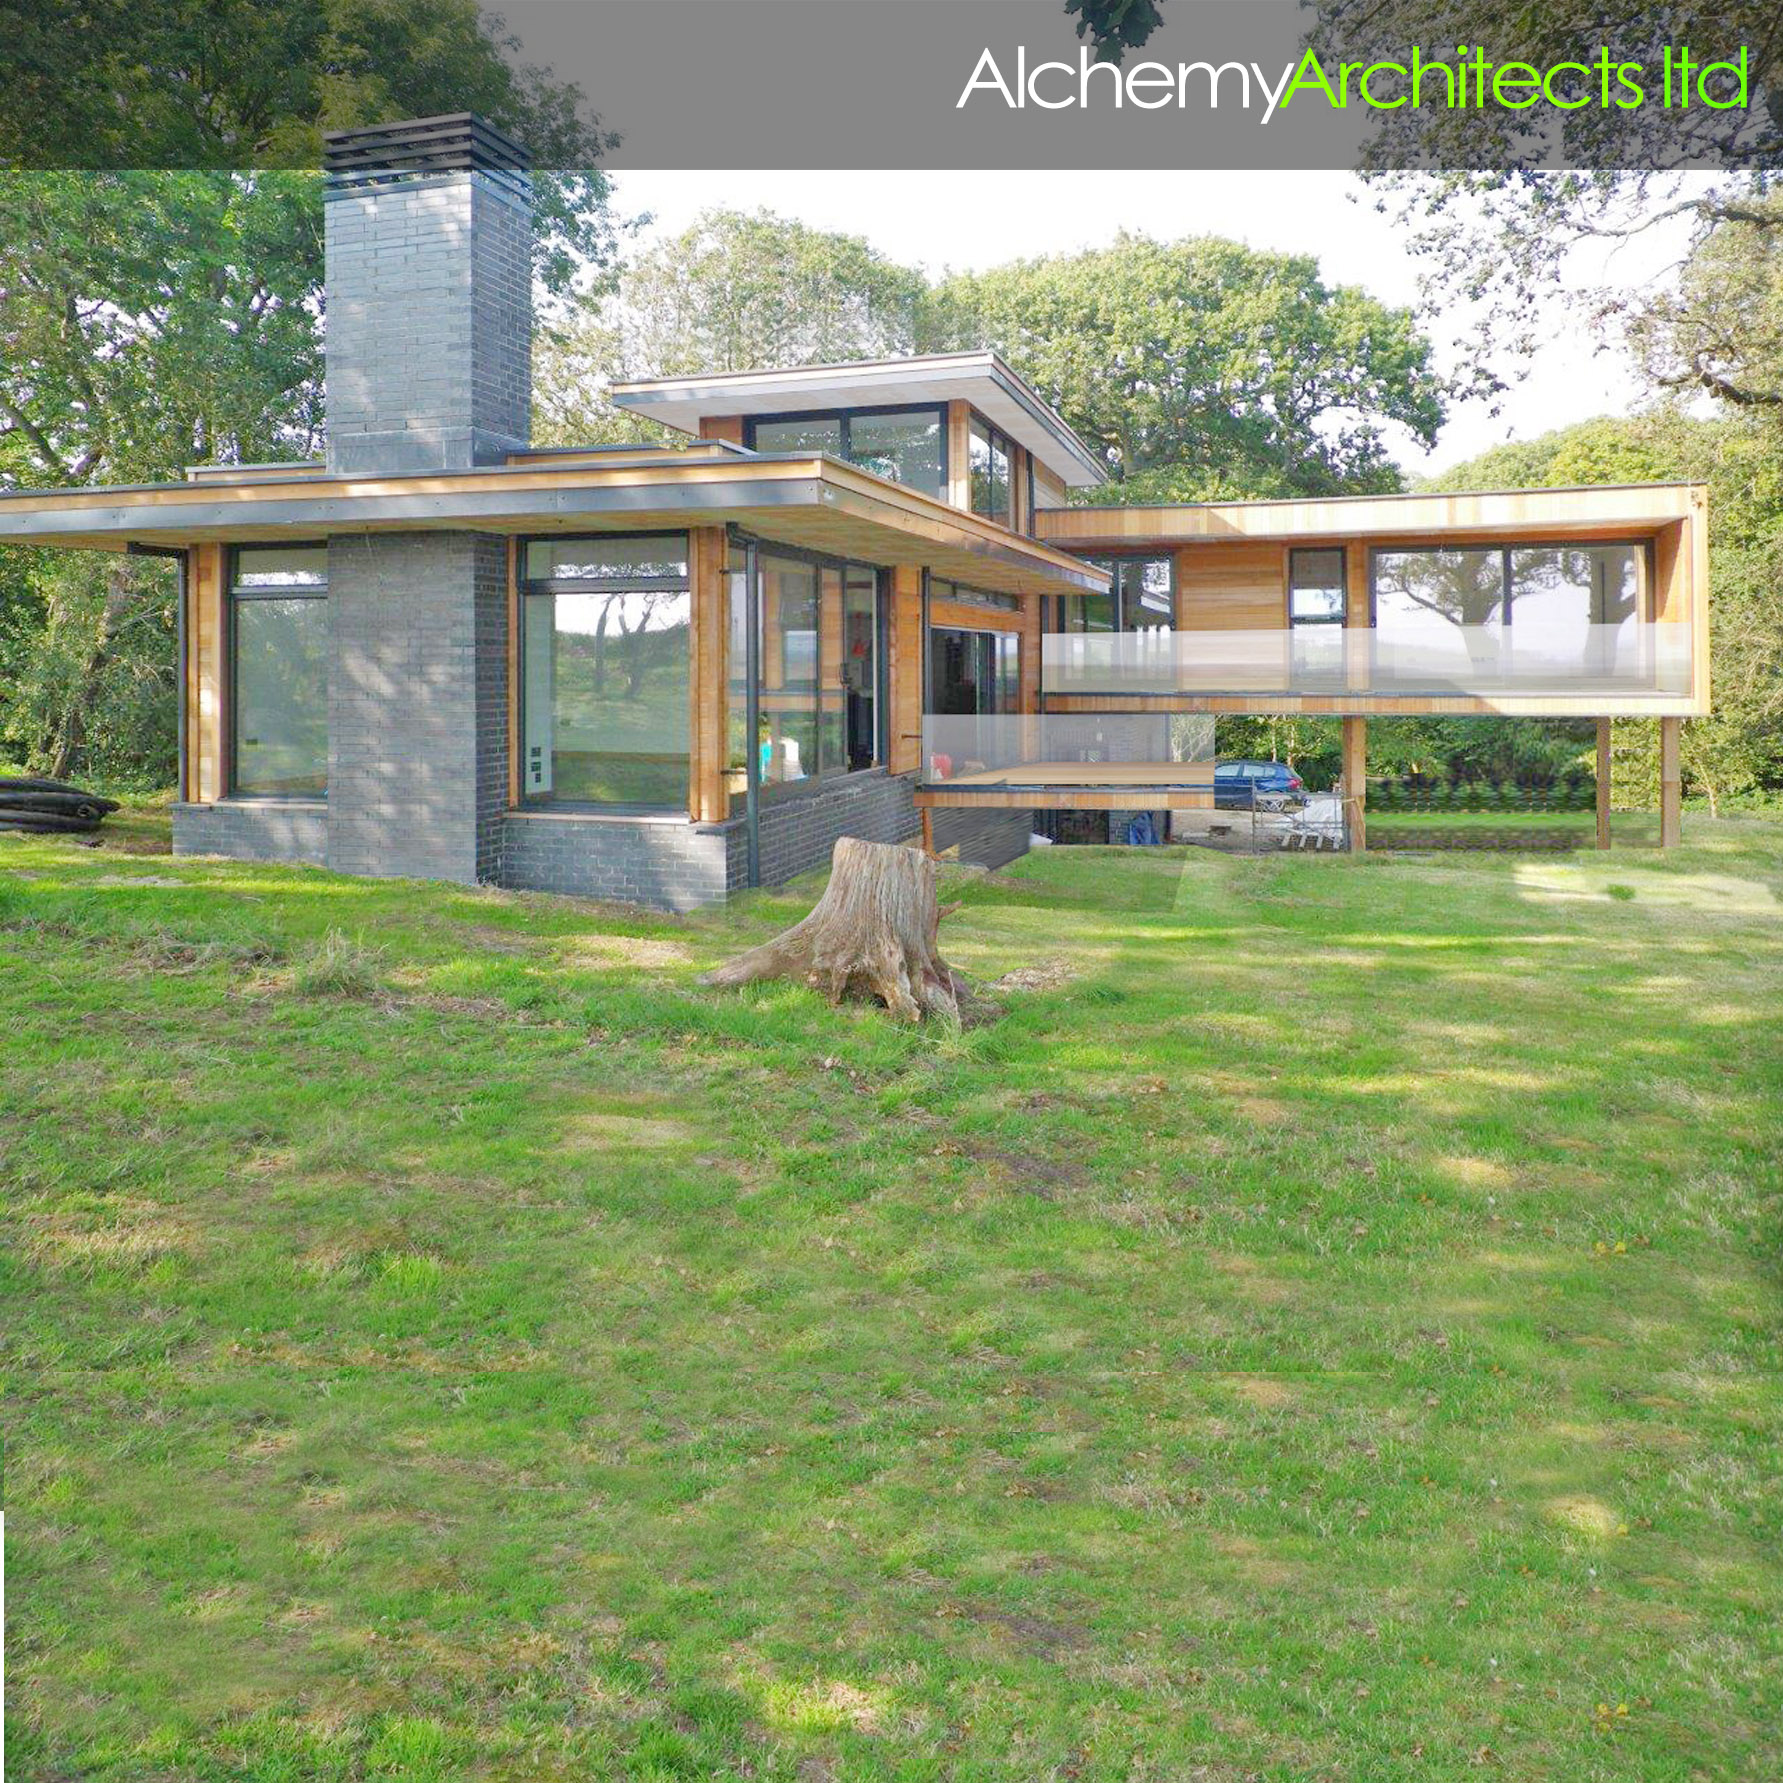 venture house by alchemy architects.jpg